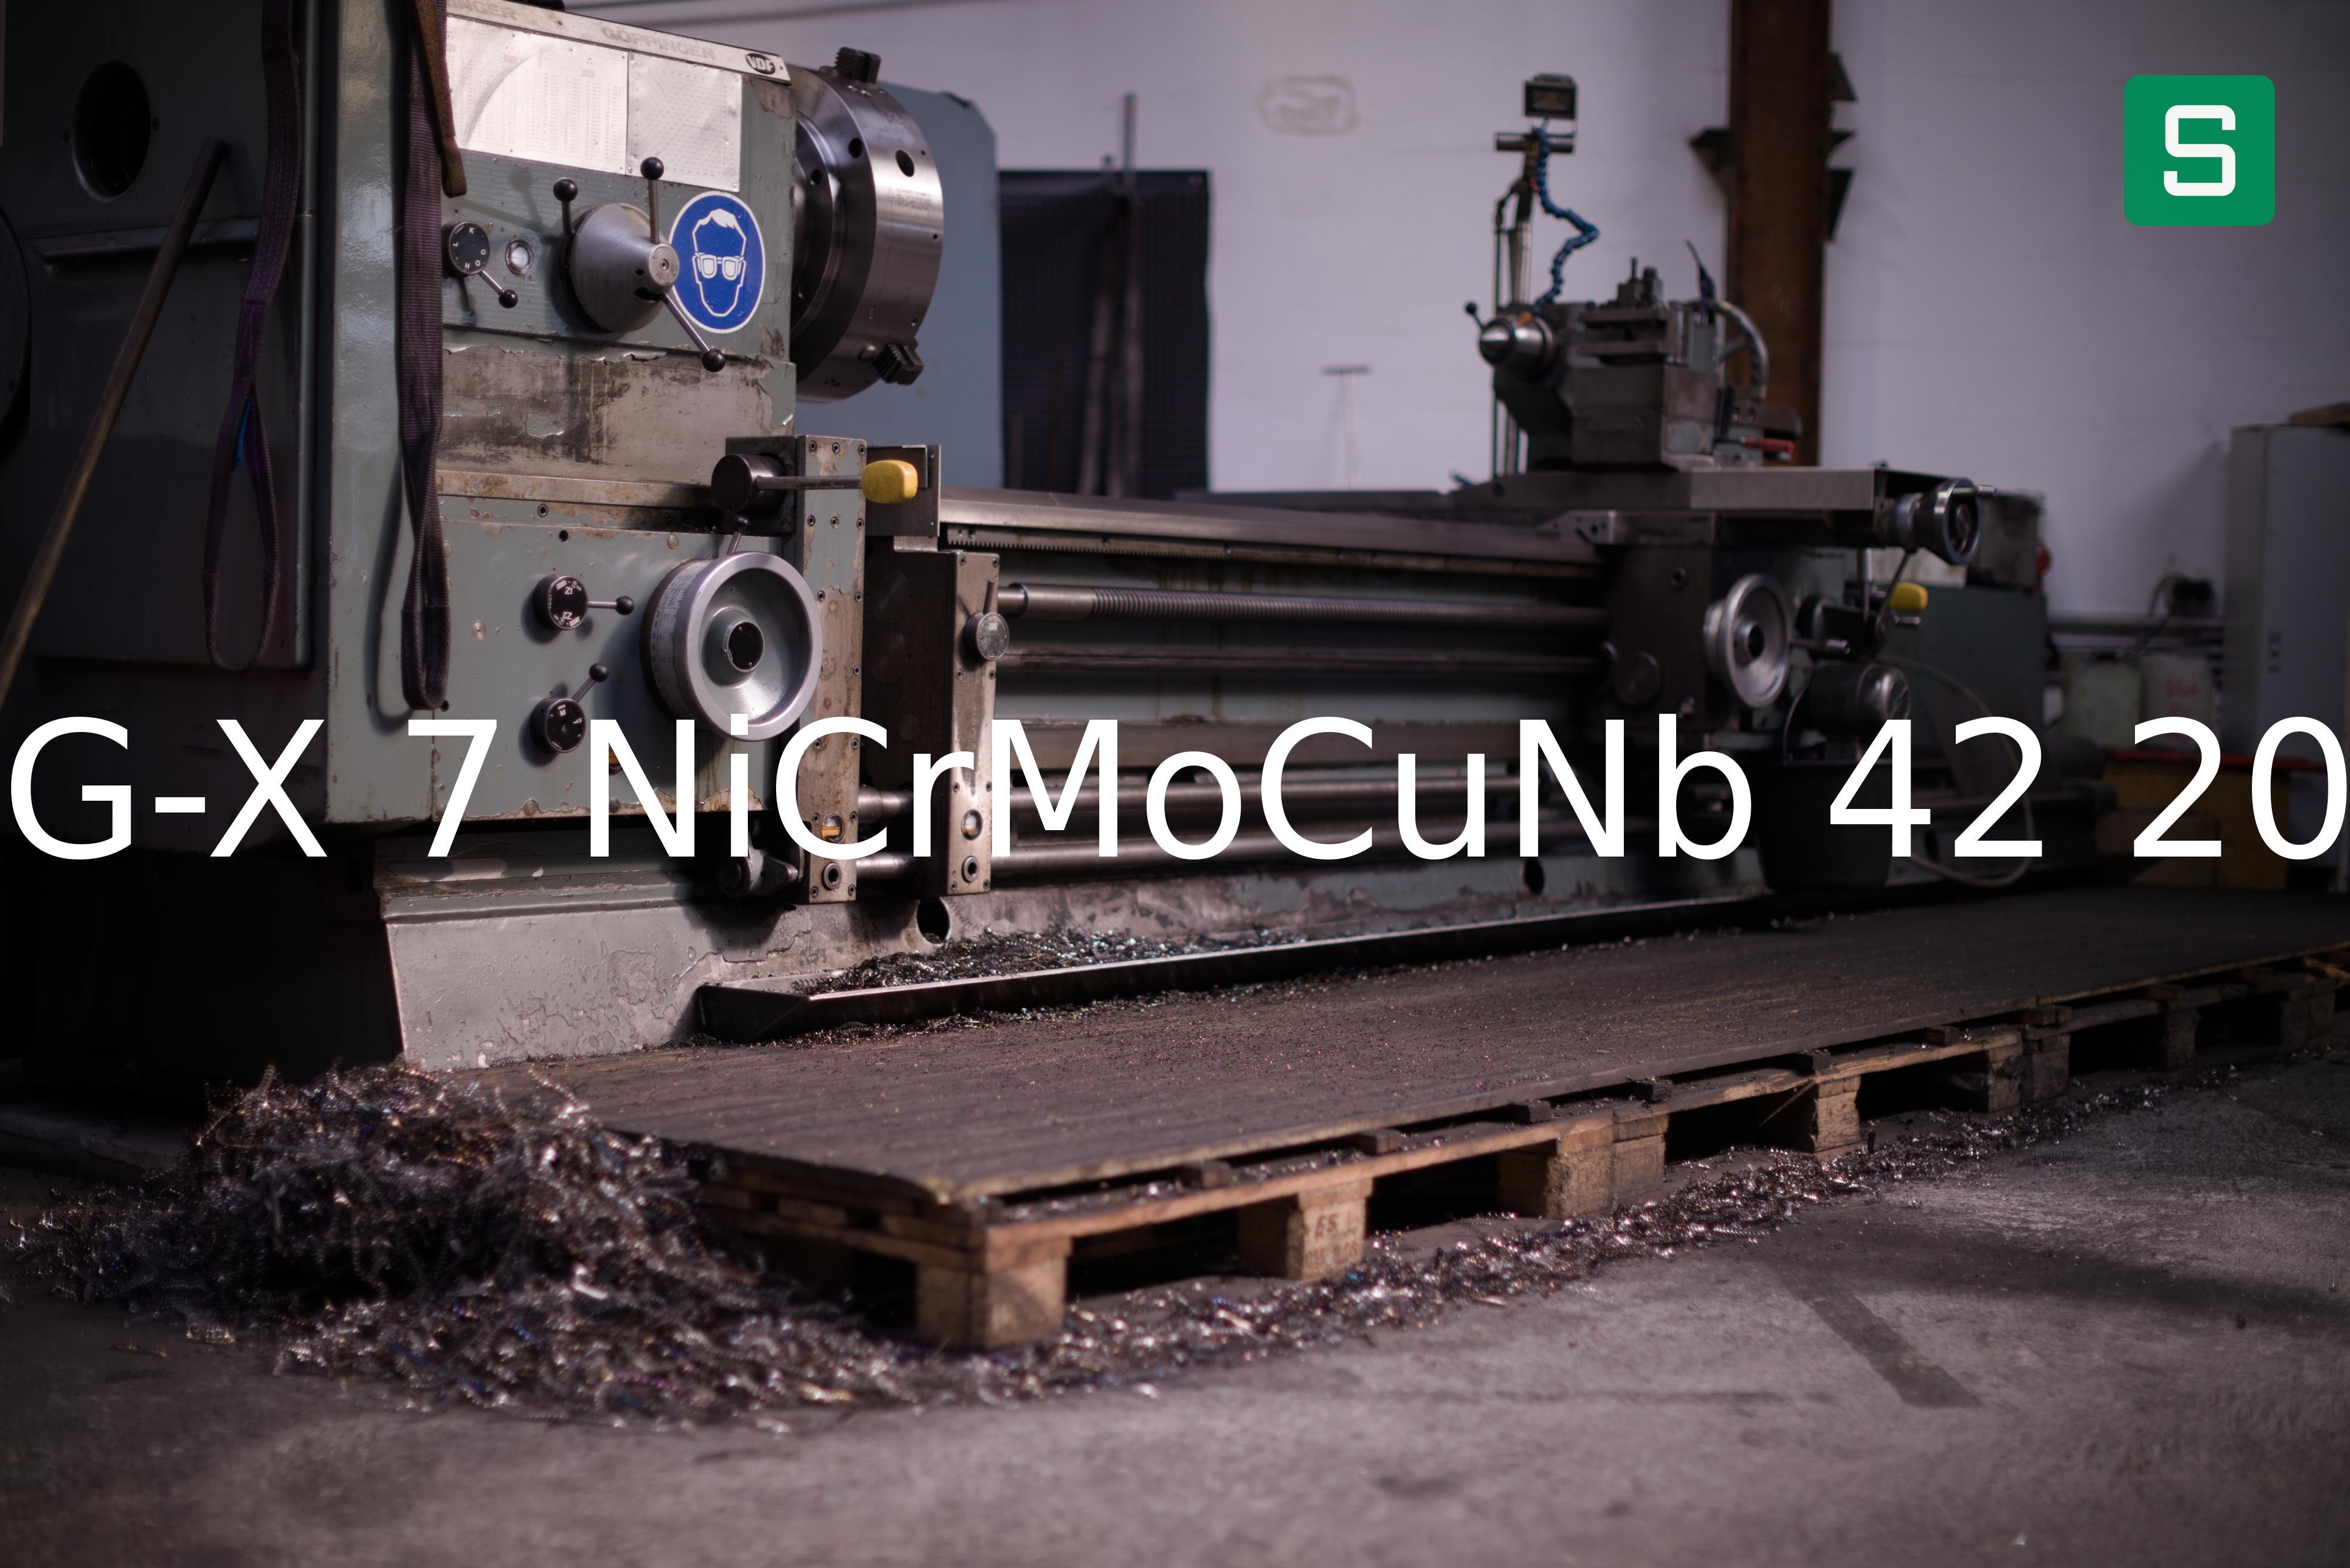 Steel Material: G-X 7 NiCrMoCuNb 42 20